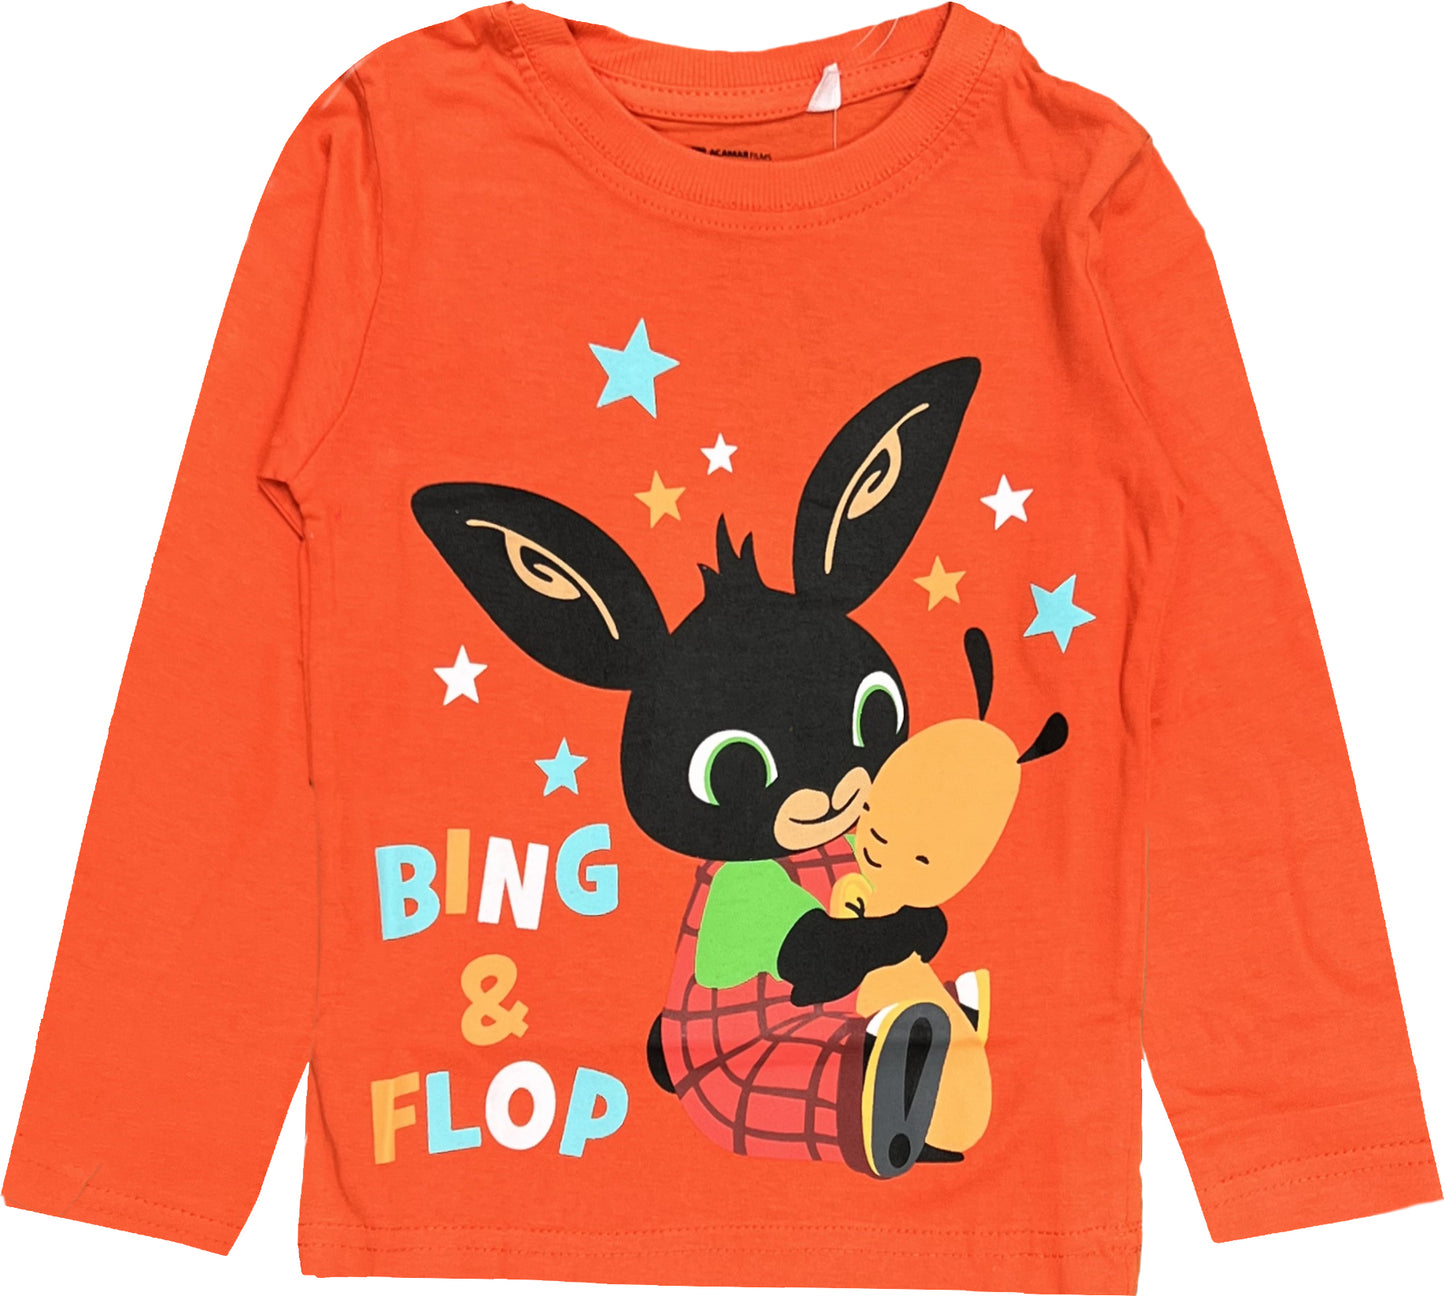 Bing Bunny Kids Long Sleeve Pajama Set